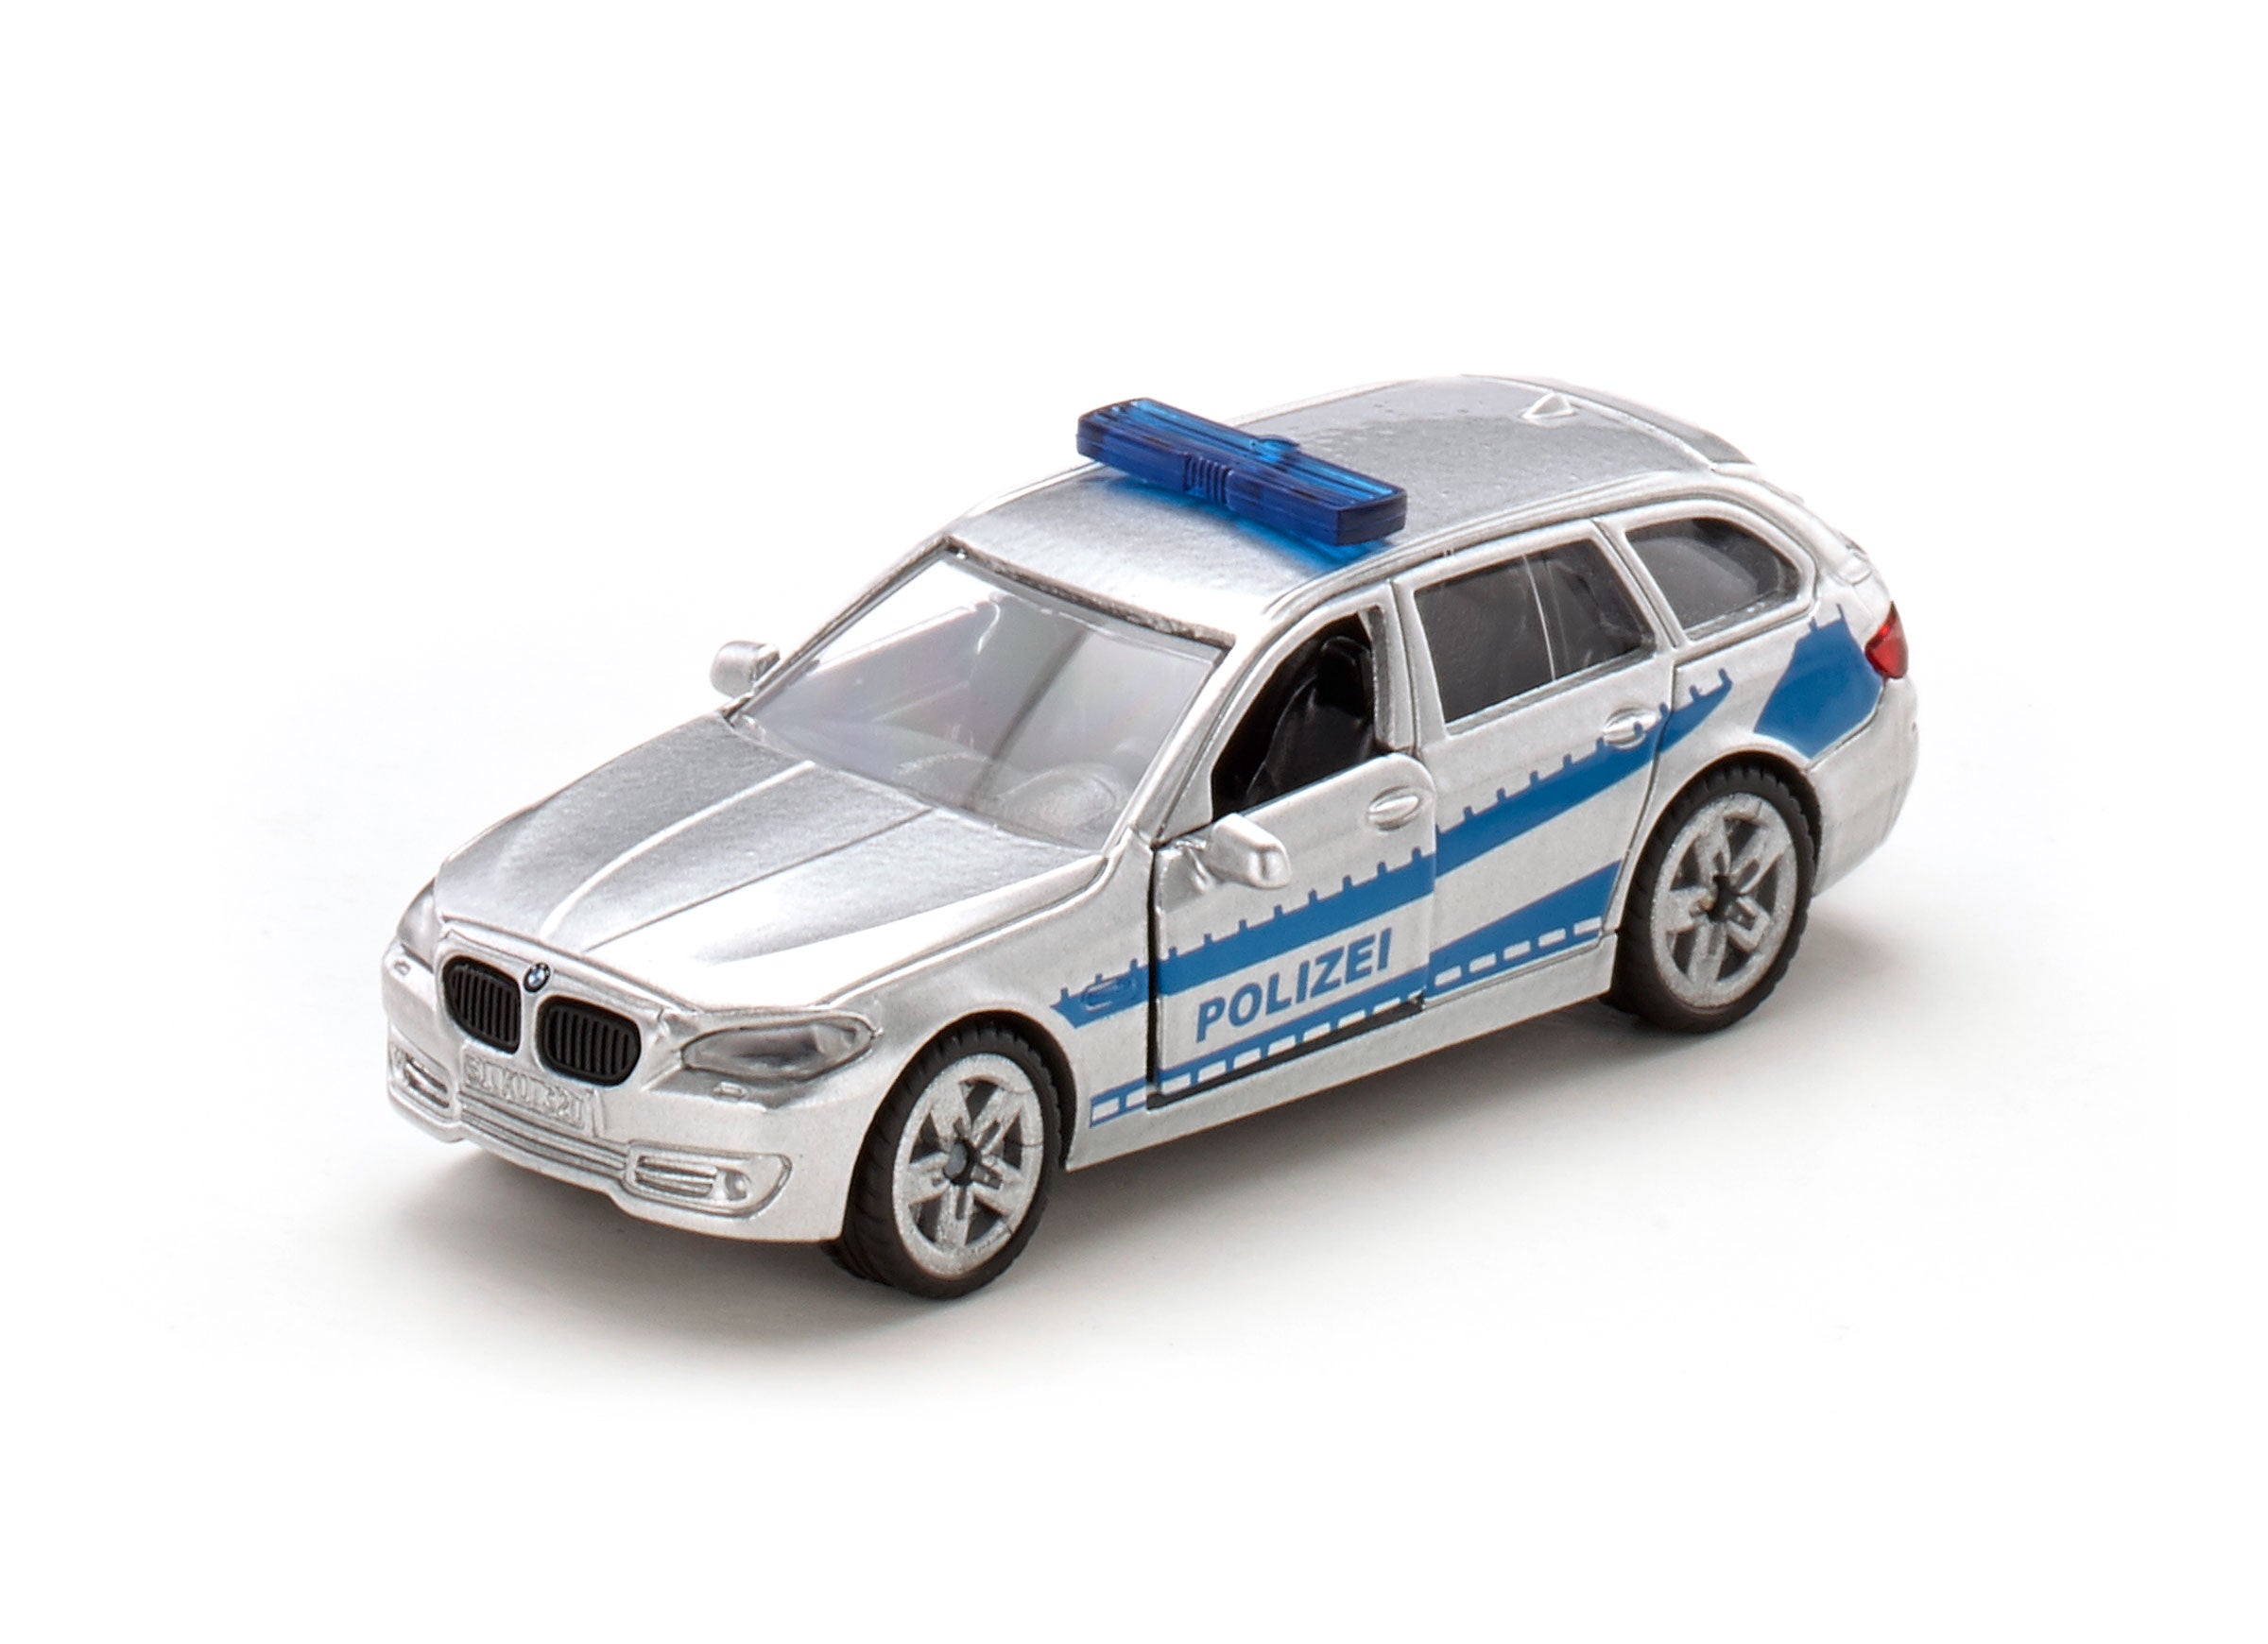 Siku 1:87 Police Patrol Car